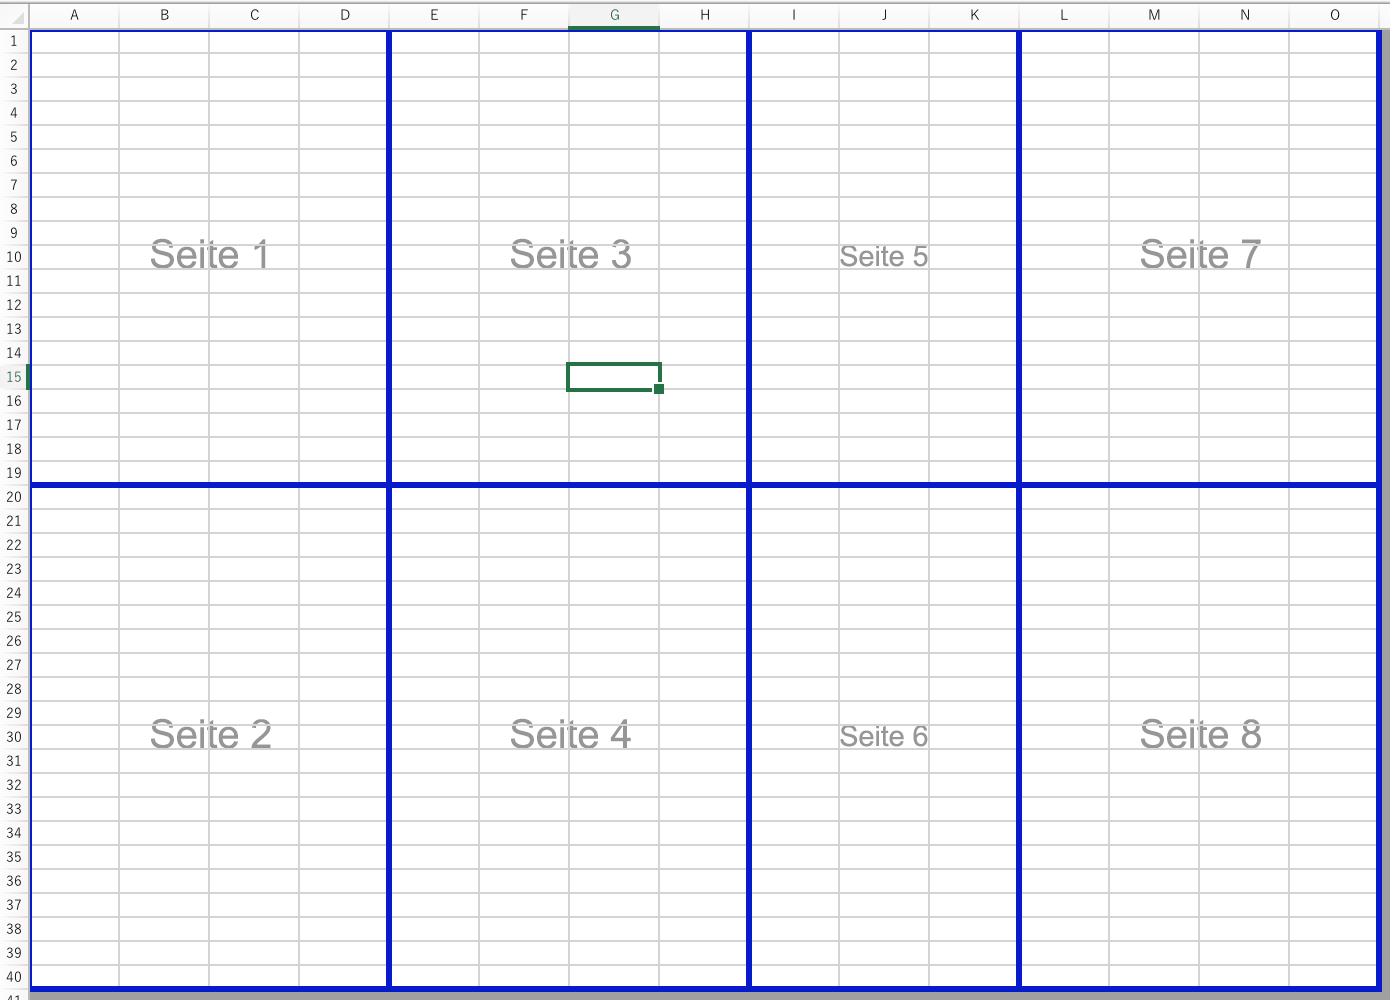 Erstellen manueller Seitenumbrüche in einem Arbeitsblatt mit Excel für Mac 87d07d11-5d0b-4521-9d5a-ec3d69119e72.png